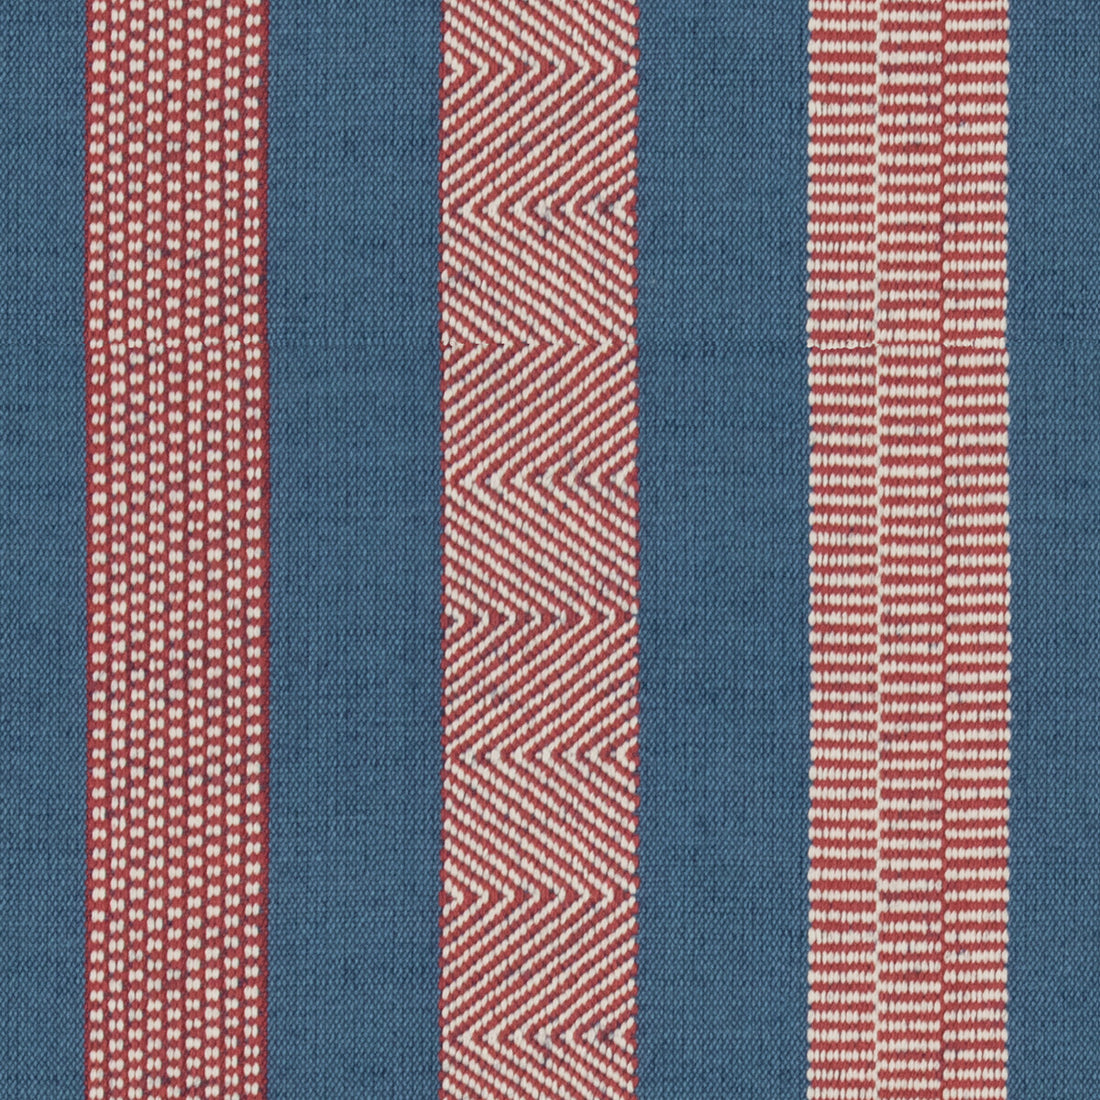 Berber fabric in denim/ruby color - pattern 2017100.519.0 - by Lee Jofa in the Oscar De La Renta III collection